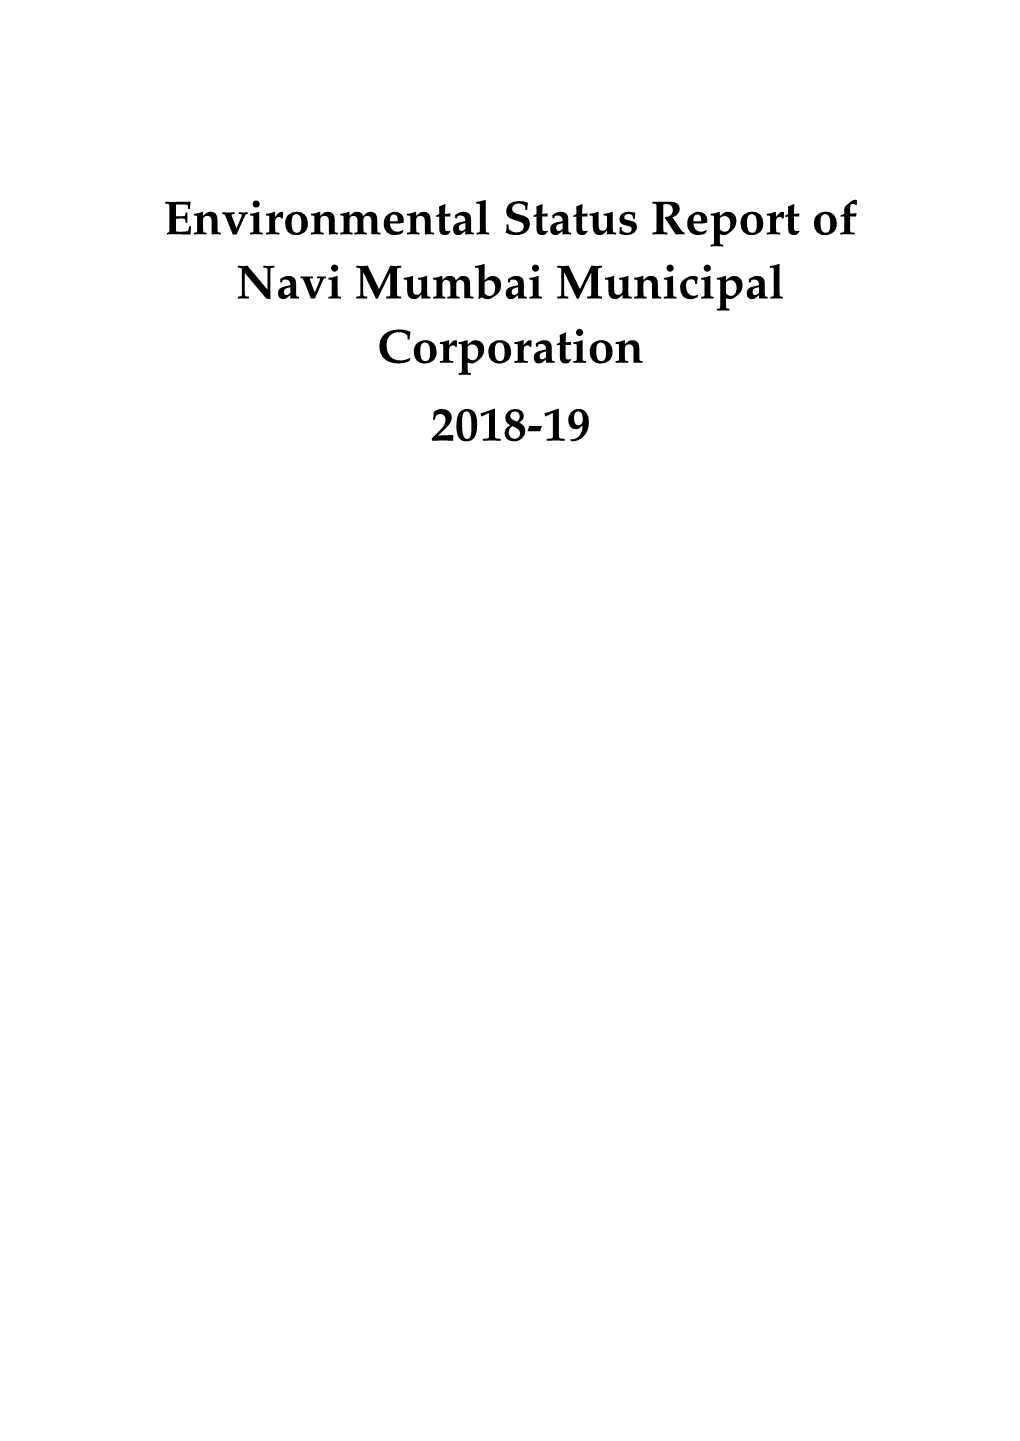 Environmental Status Report of Navi Mumbai Municipal Corporation 2018-19